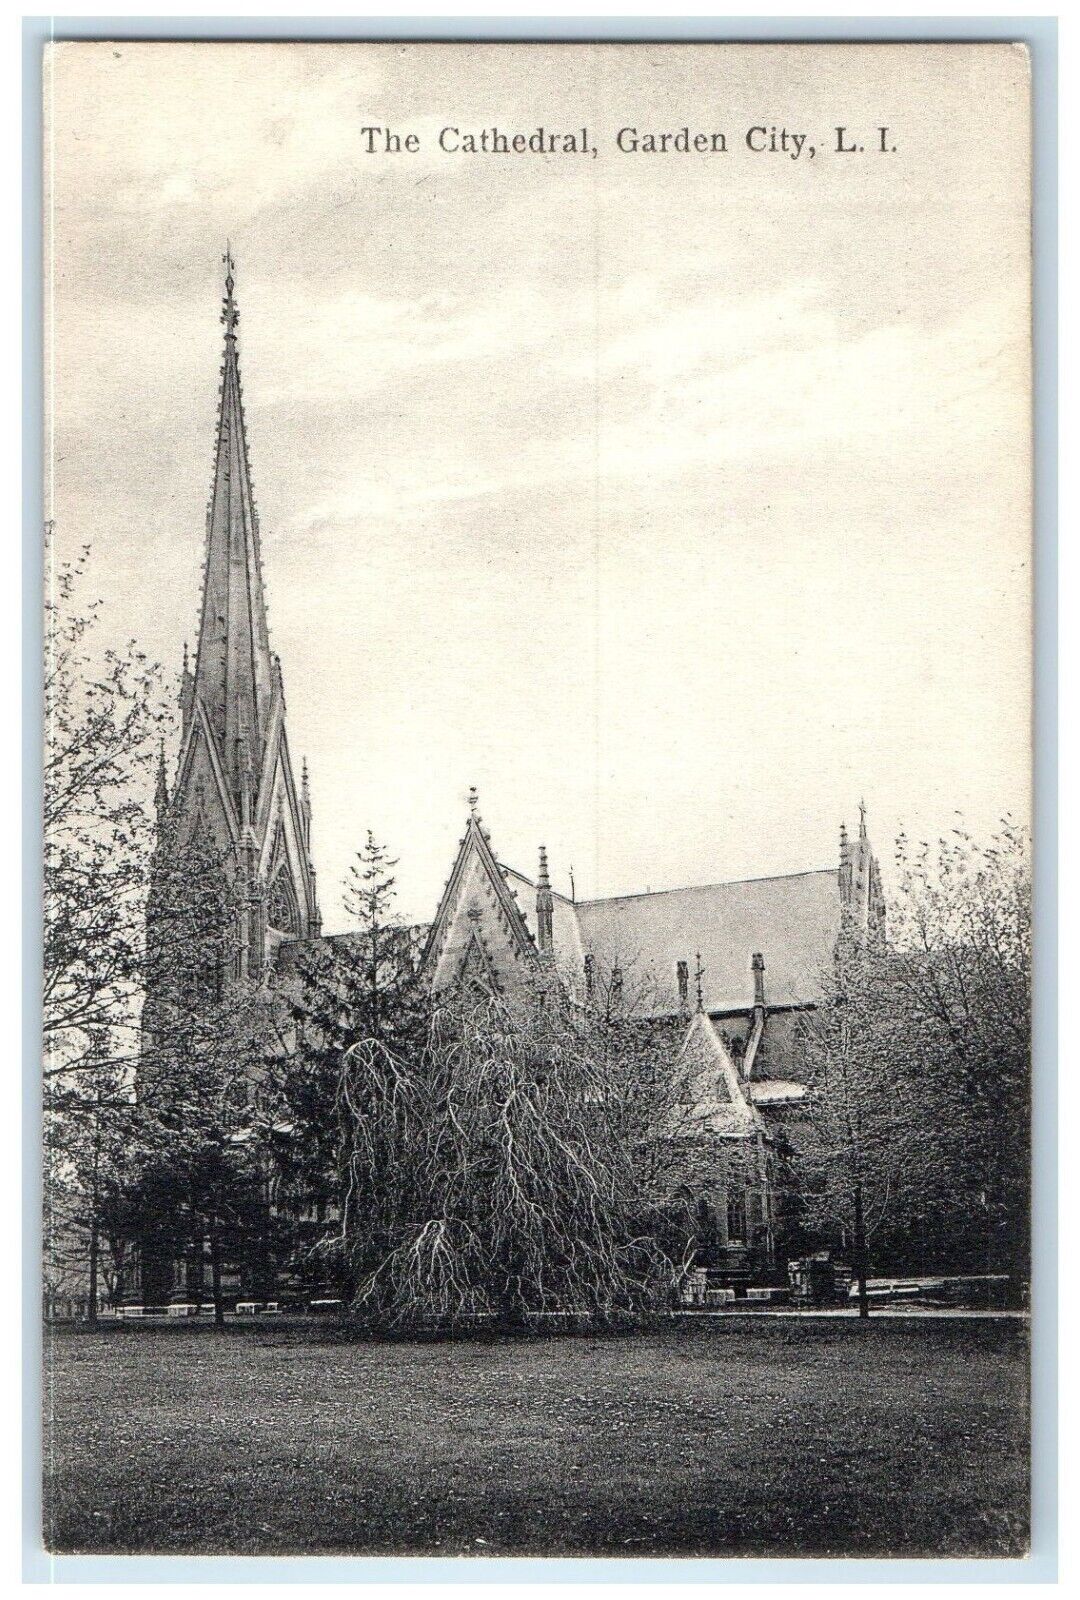 1911 The Cathedral Garden City Exterior Building Long Island New York Postcard